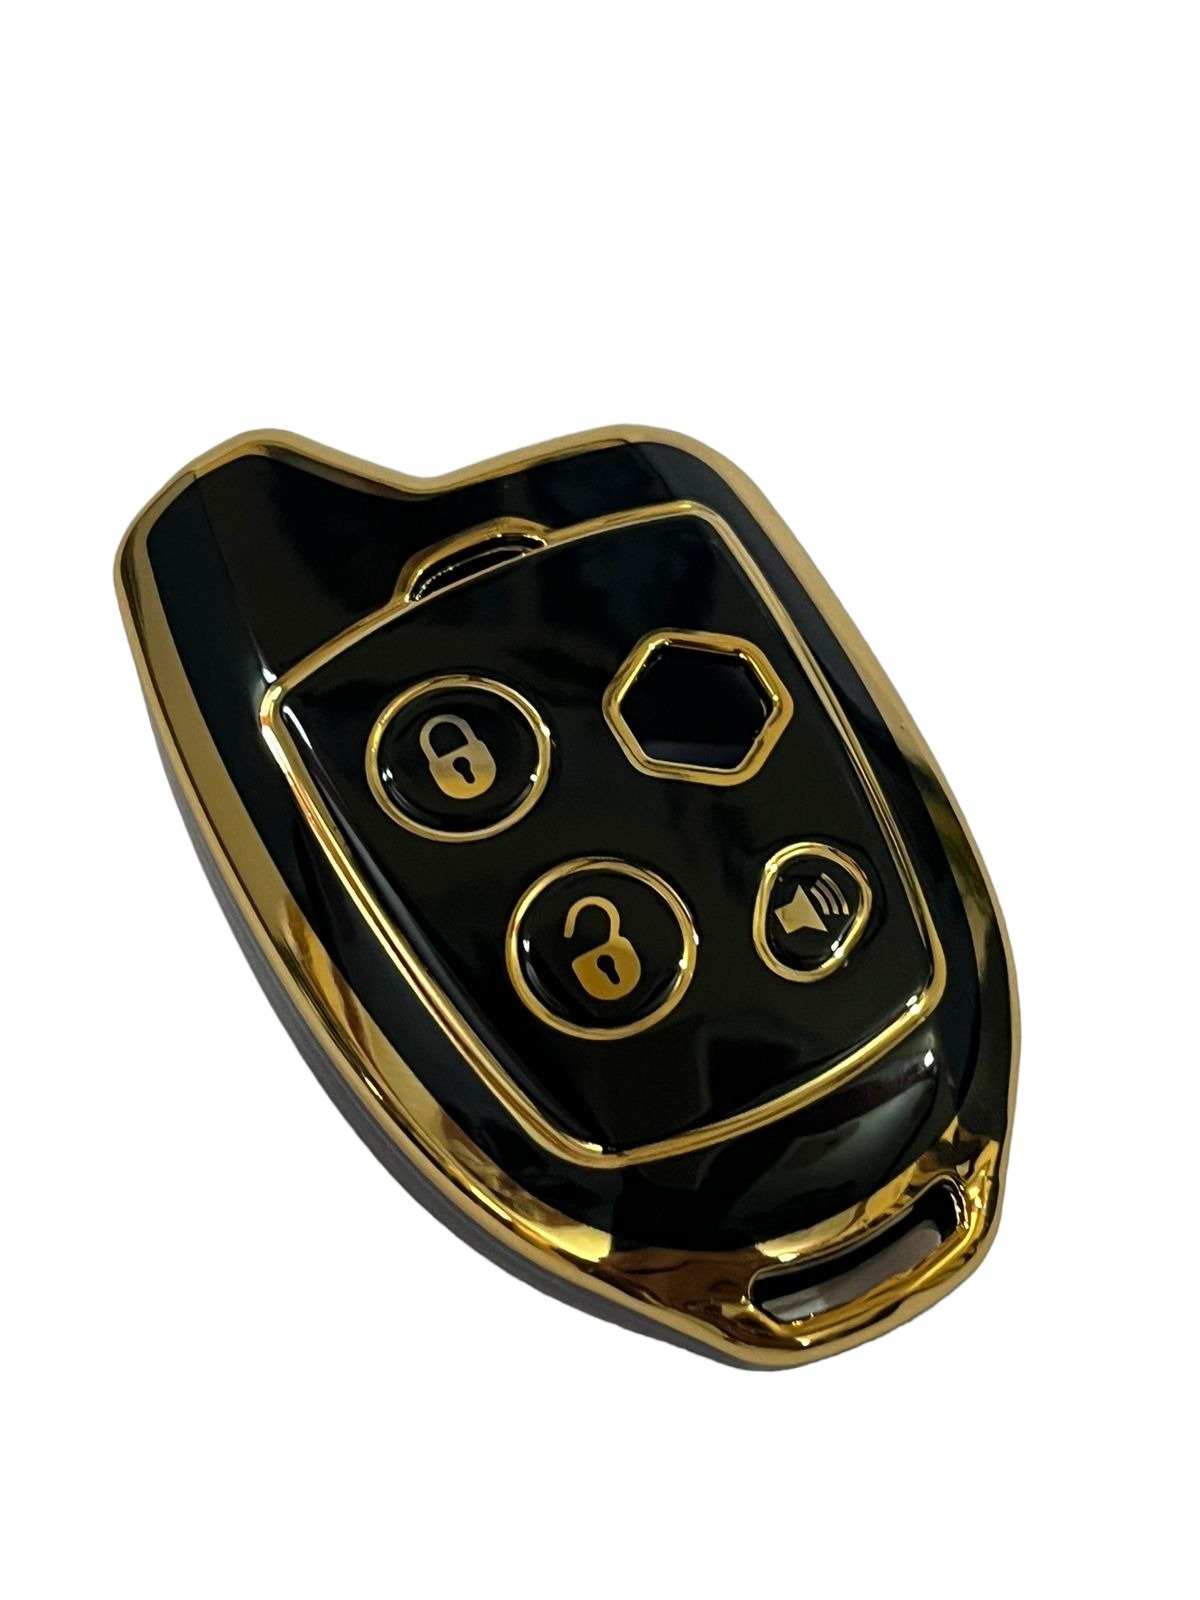 TPU Key Cover Compatible For Swift,Dzire Ritz WagonR S-Cross, Ertiga, Astar, Ciaz, Celerio, WagonR, Baleno, Scross, Vitara Brezza, Baleno BS6 2020 with Nippon Remote (Gold/Black) Image 